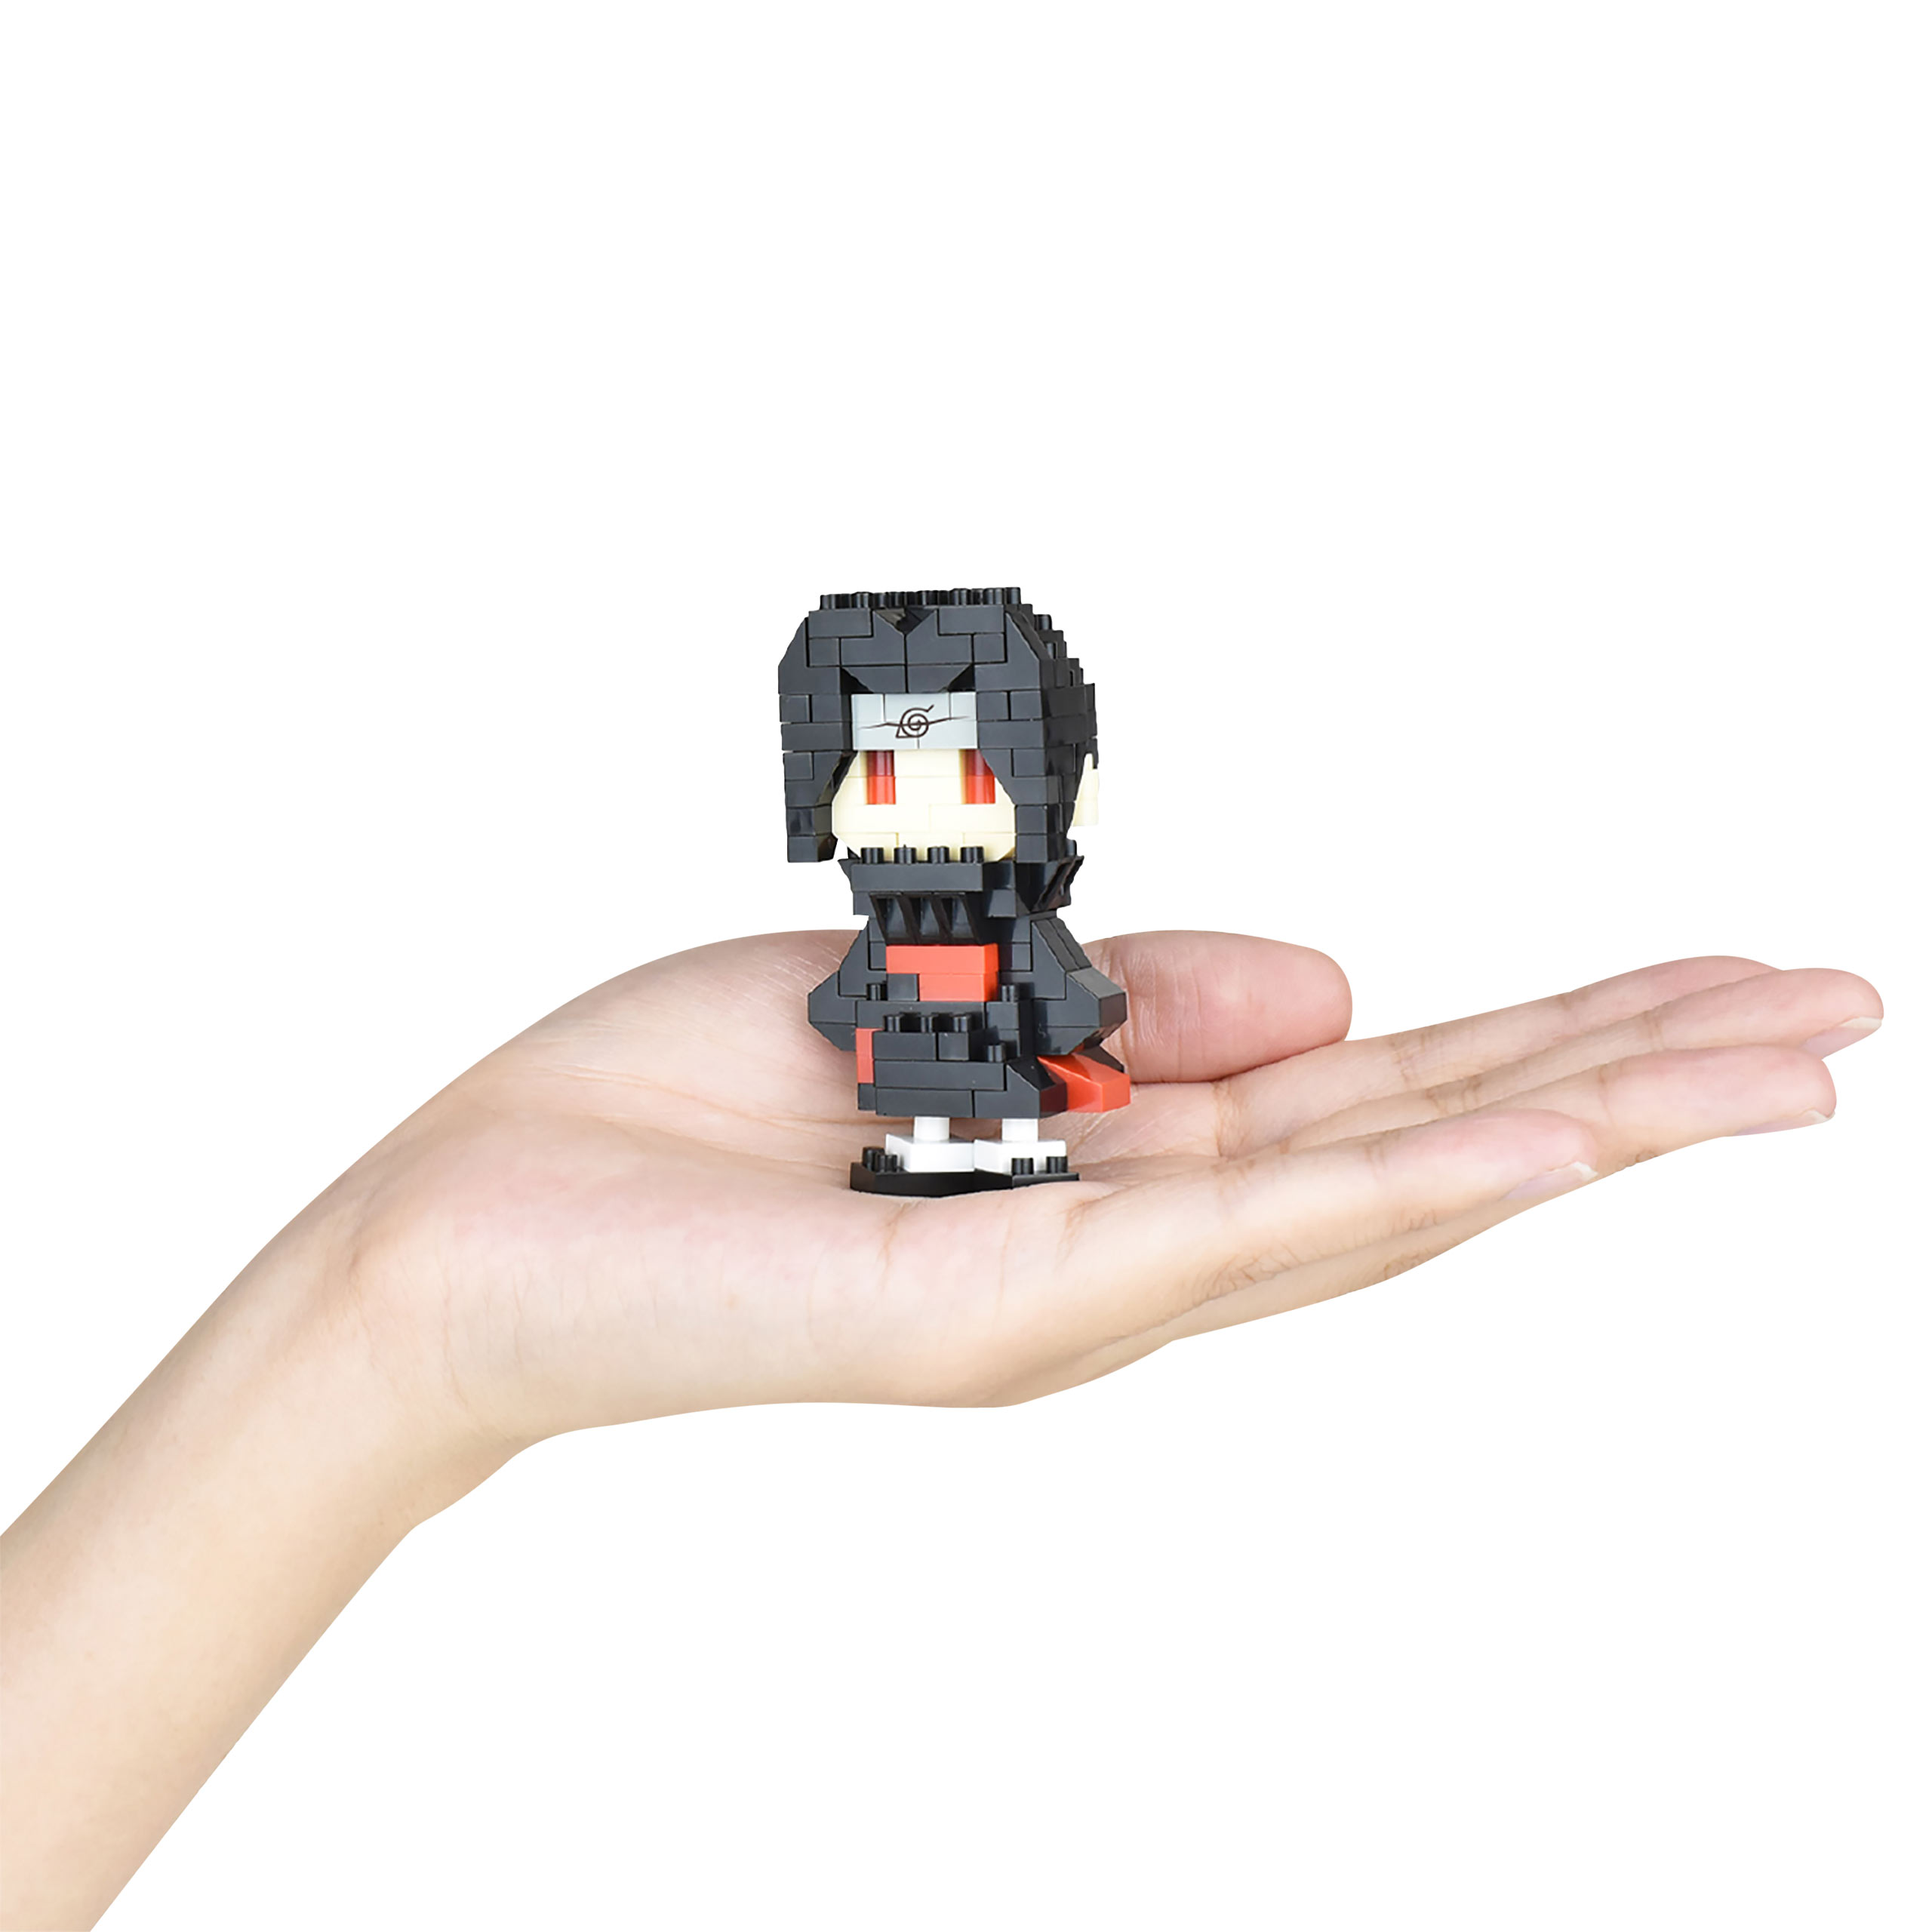 Naruto Shippuden - Itachi Uchiha nanoblock Mini Baustein Figur